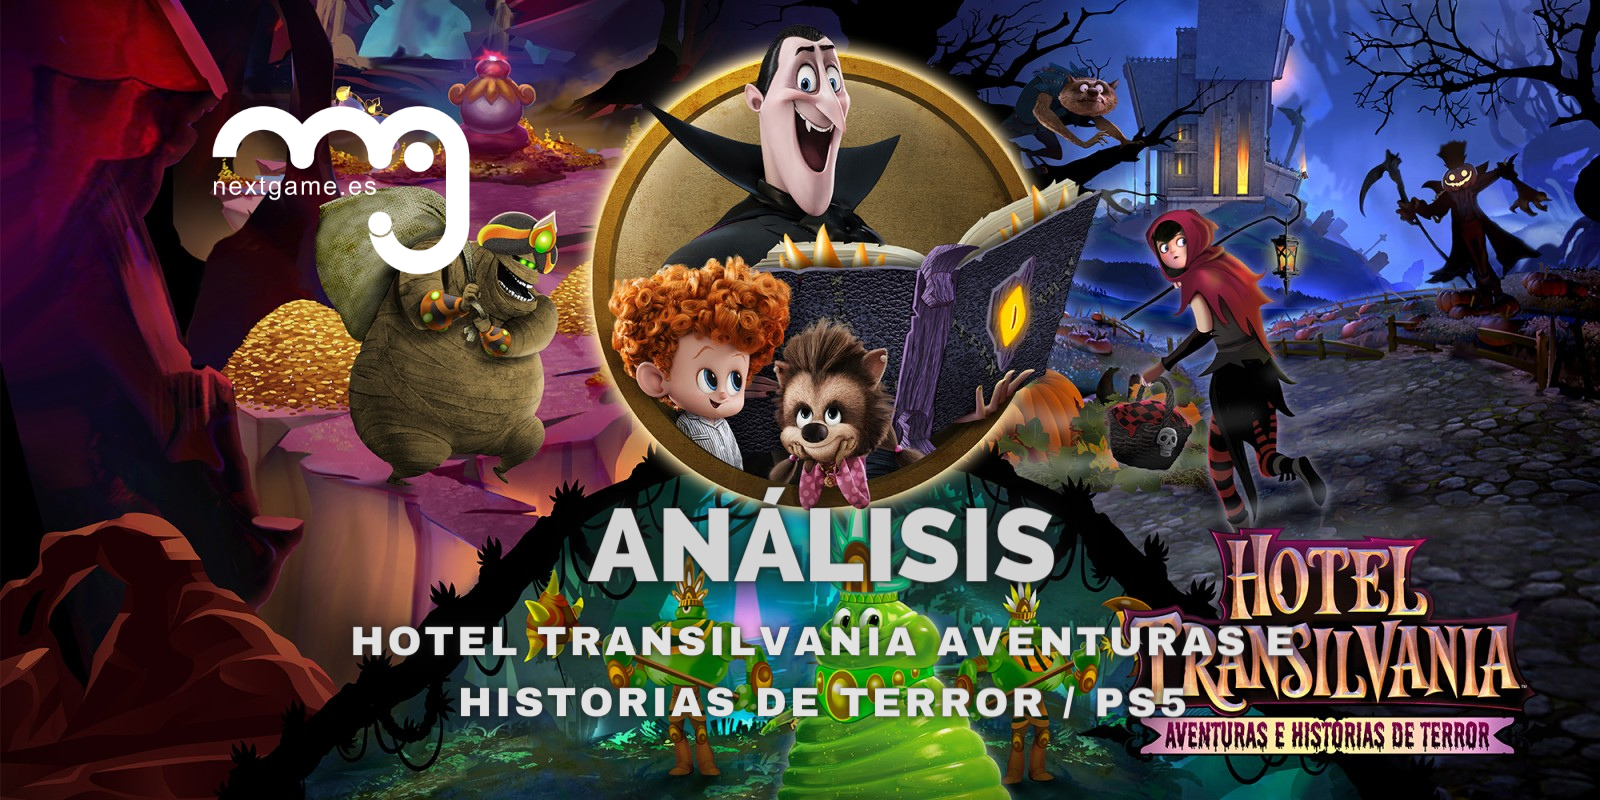 ANALISIS HOTEL TRANSILVANIA AVENTURAS TERROR